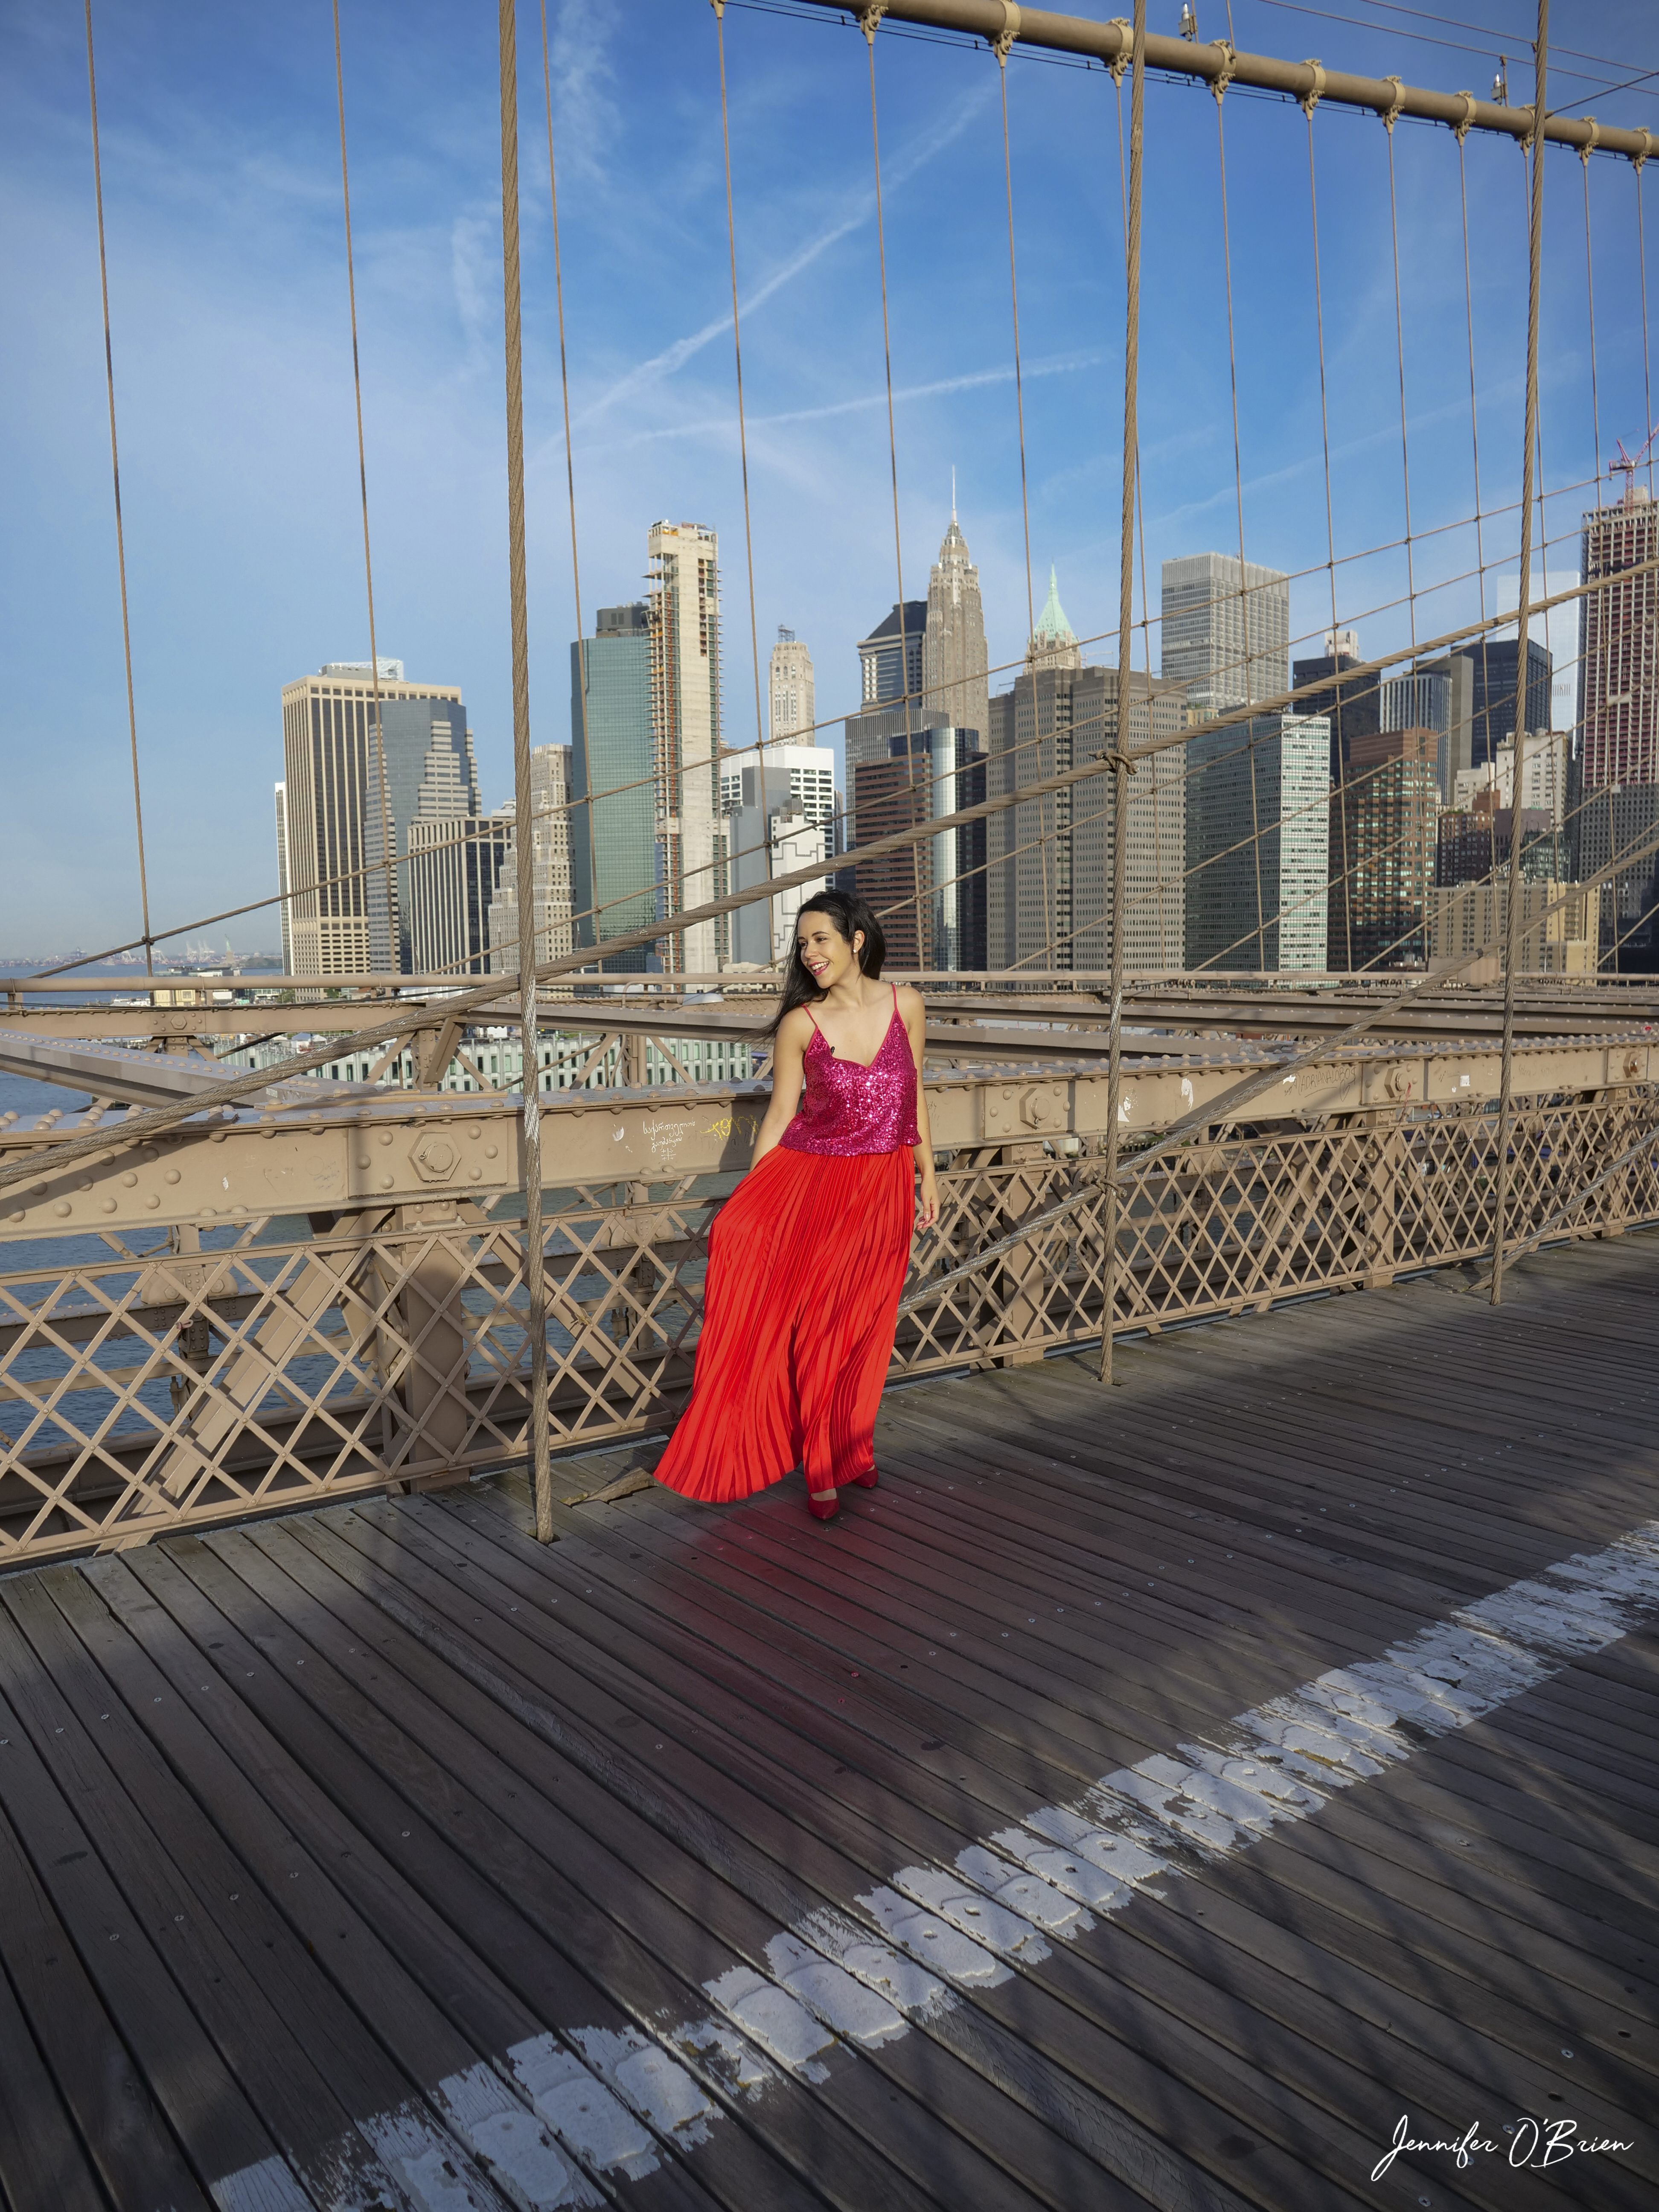 Top Instagram Photos of the Brooklyn Bridge The Travel Women girl in red dress